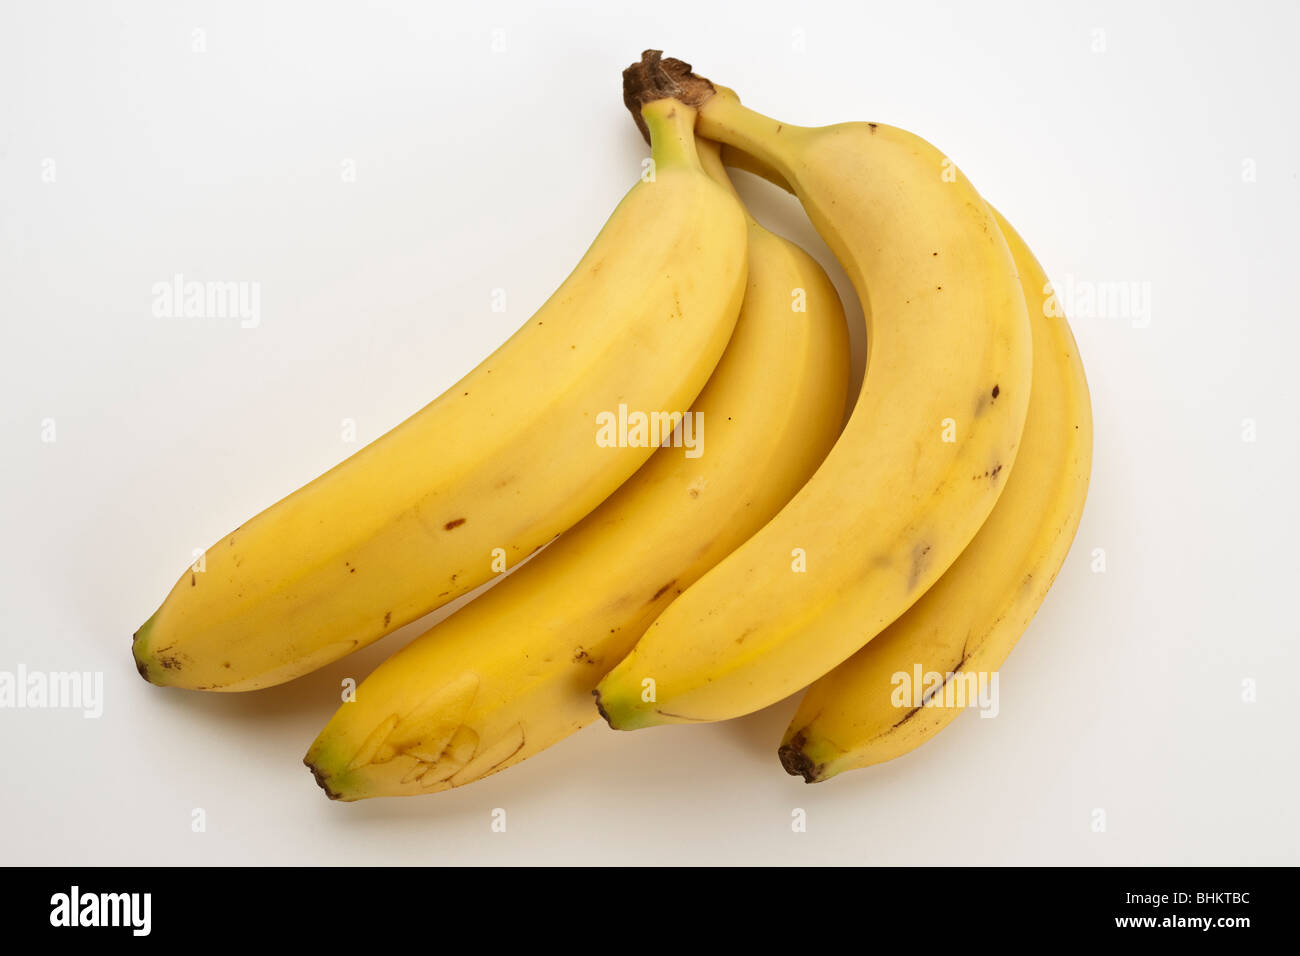 Quattro unita giallo banane mature Foto Stock